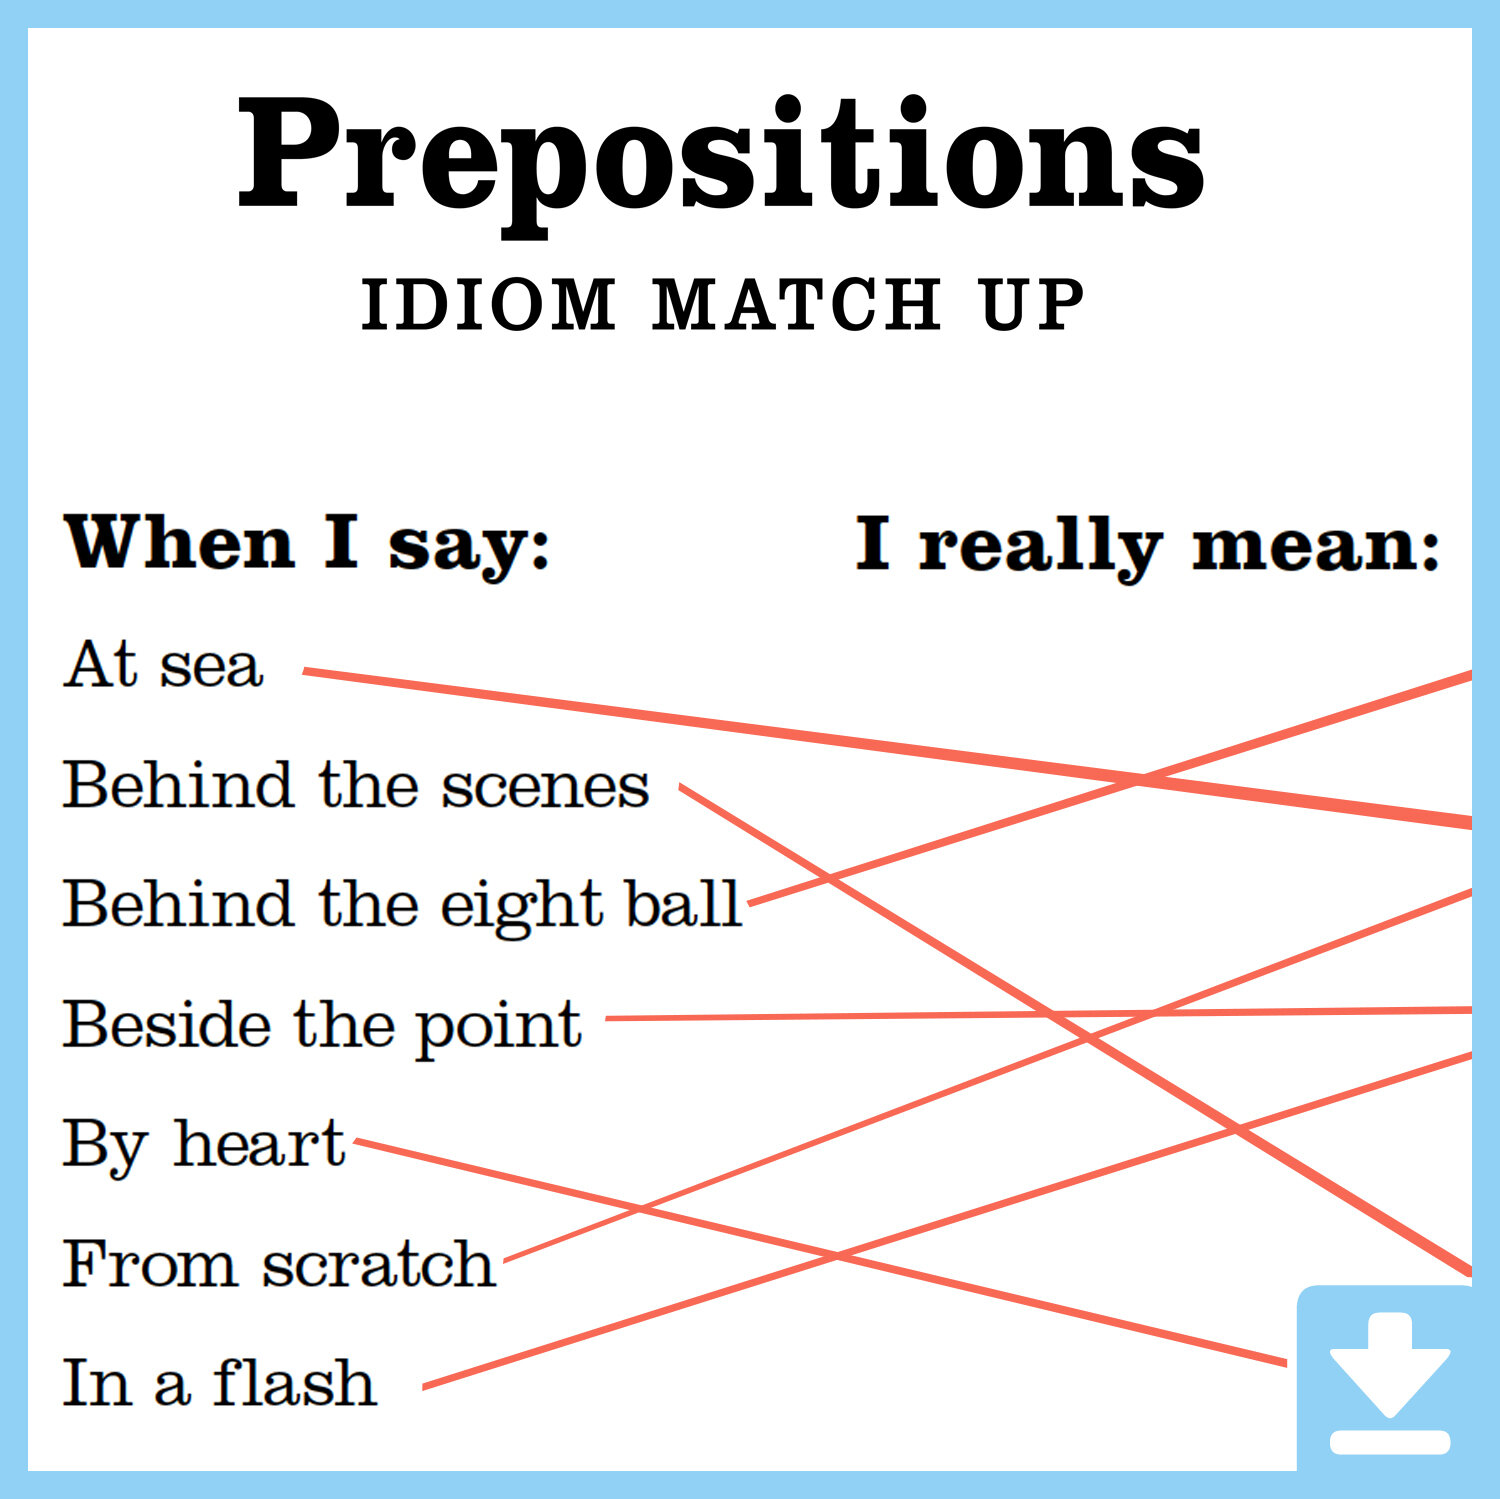 Prepositions-idiom-match-up.jpg